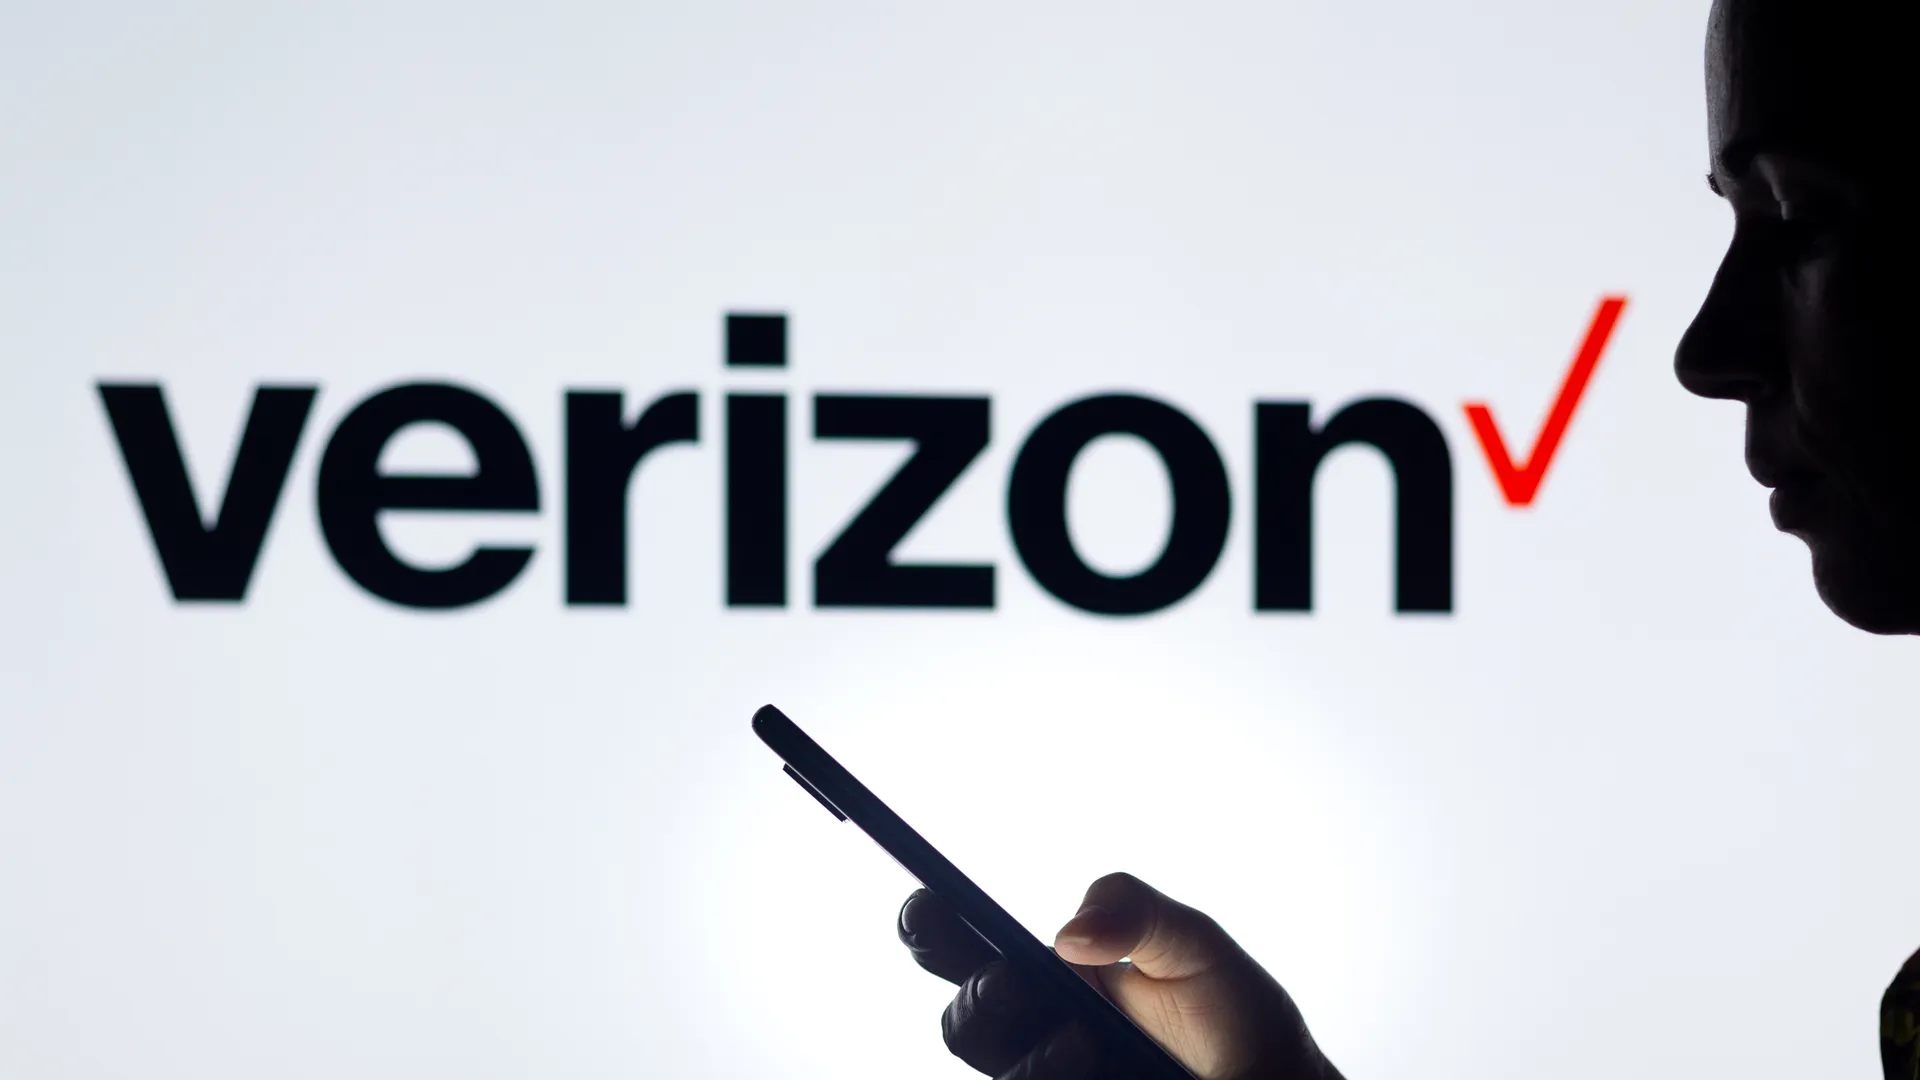 Verizon's Logo Transformation: Reflecting Corporate Evolution